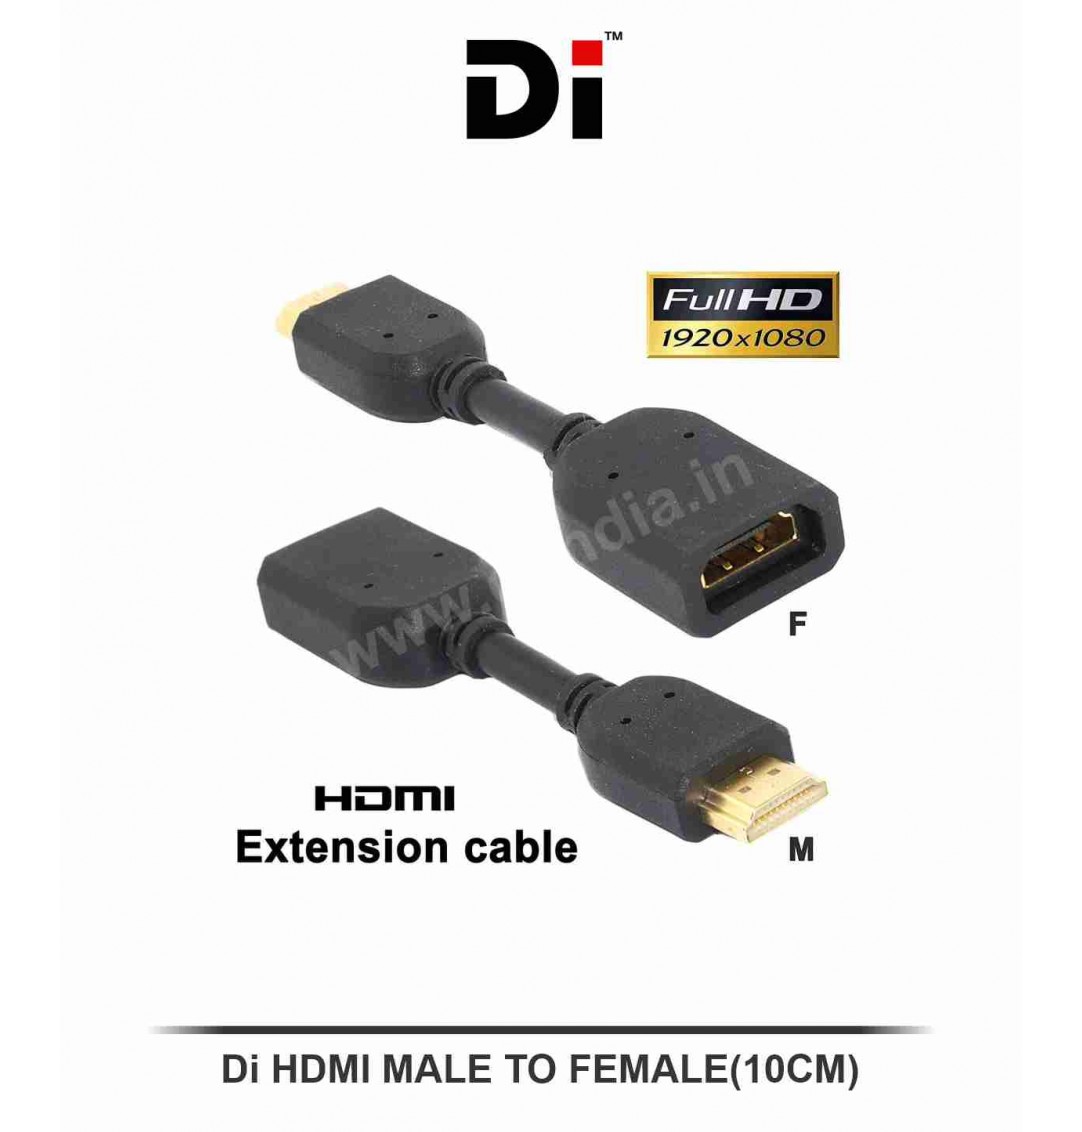 Di HDMI MALE TO FEMALE(10CM)